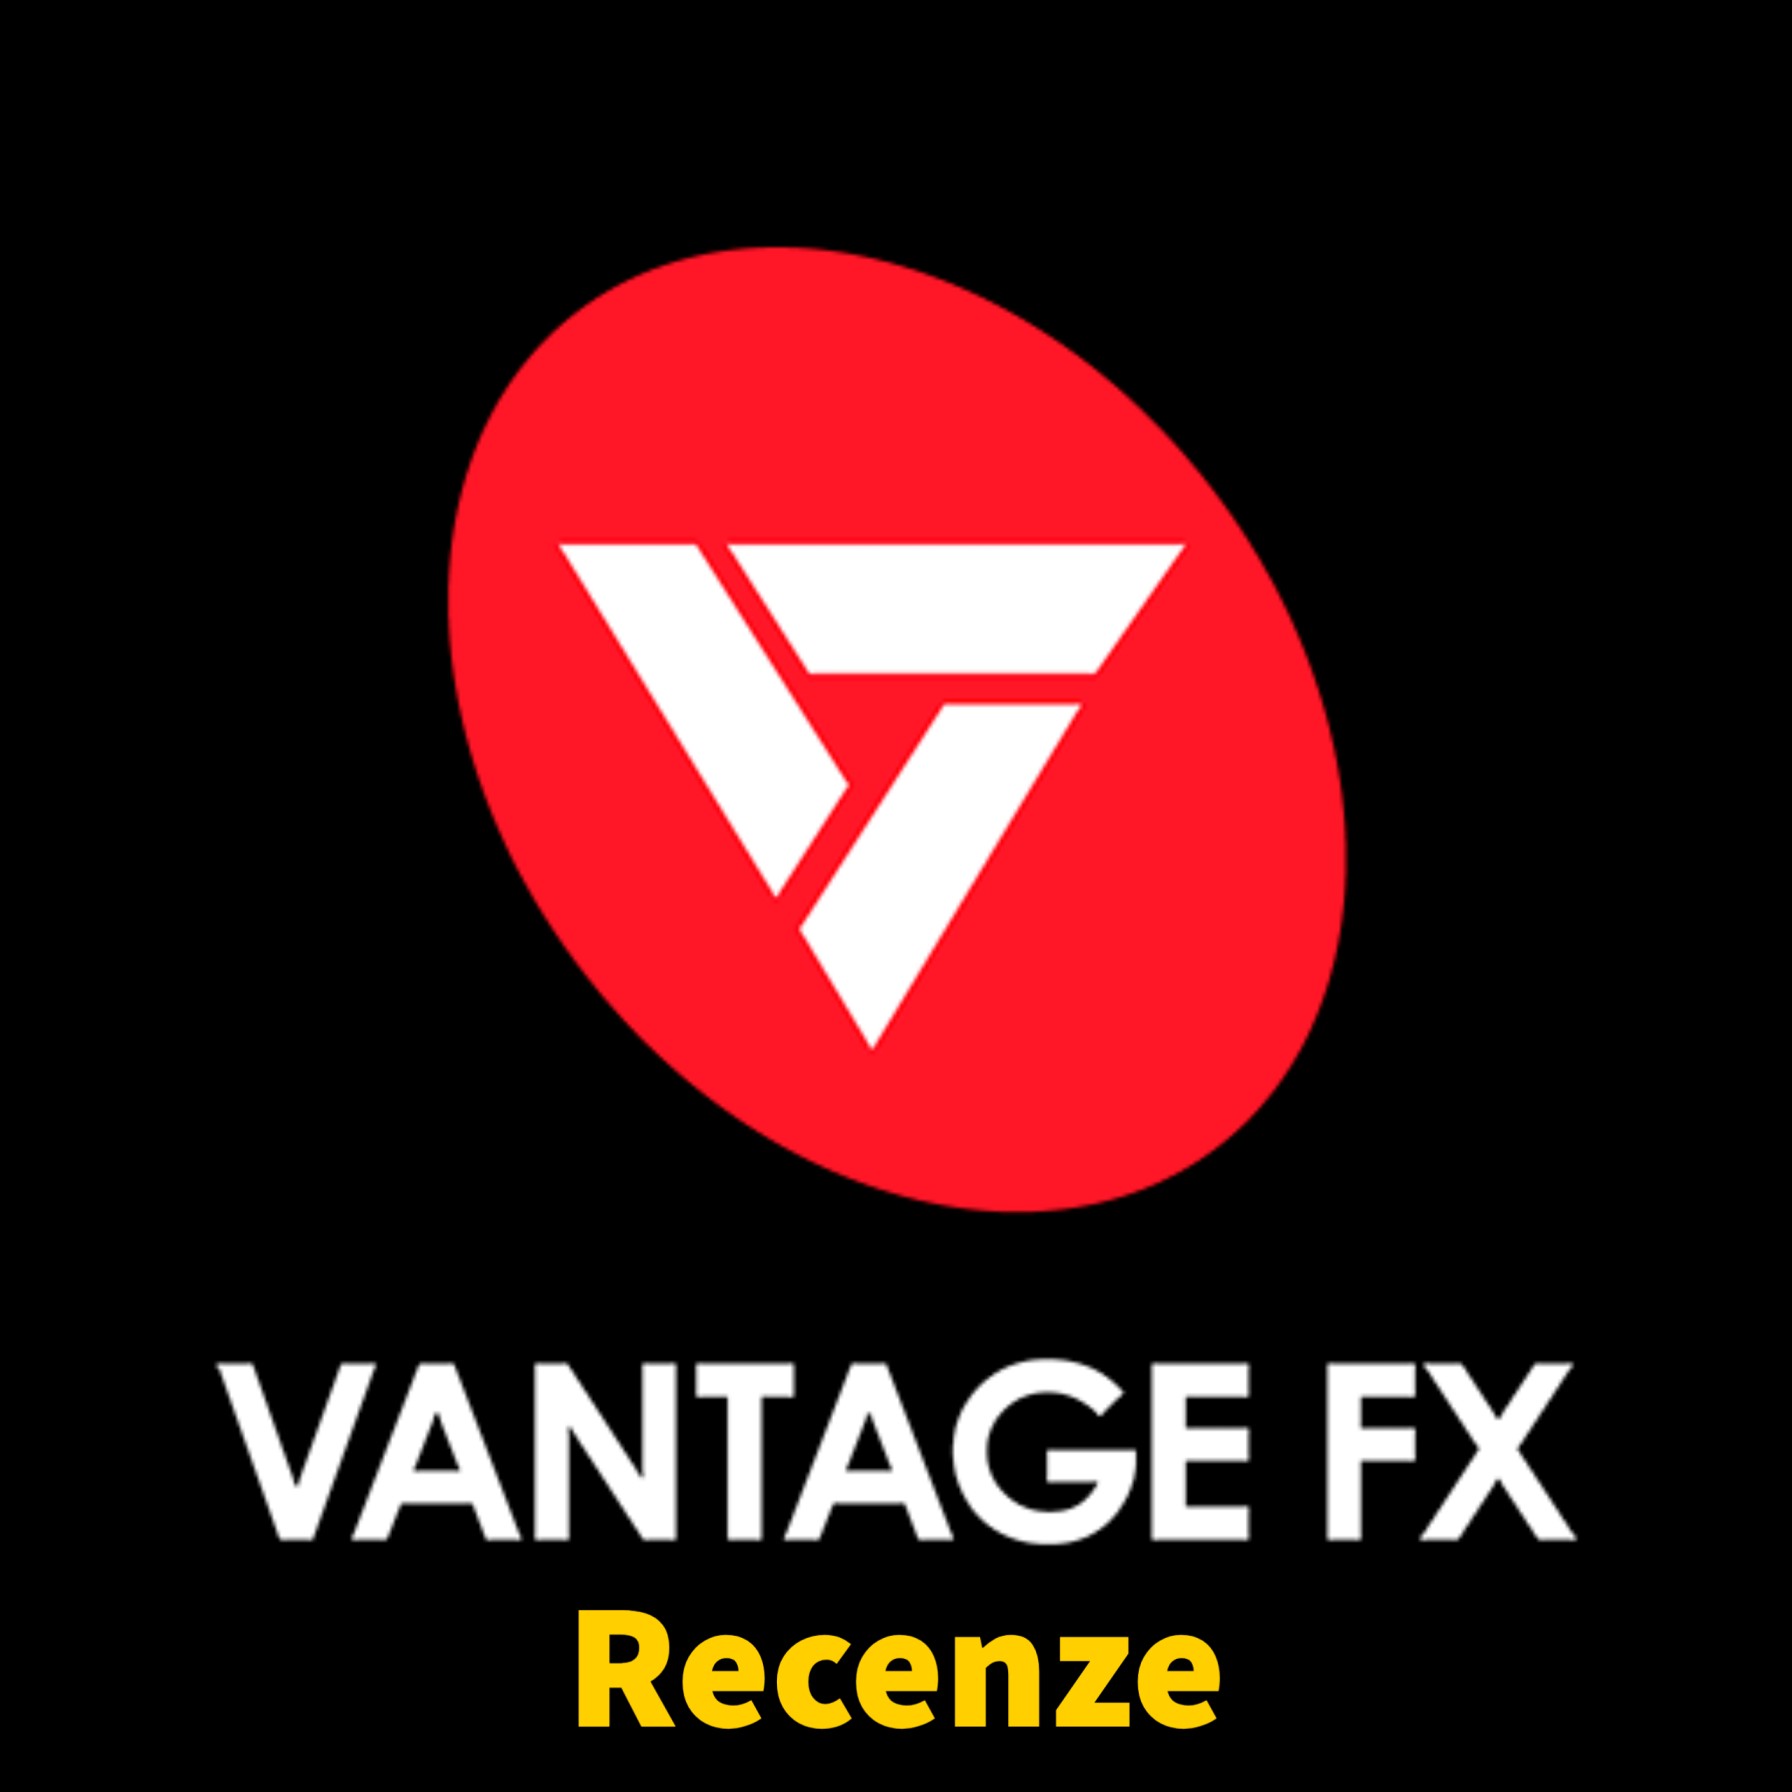 Vantage Fx recenze